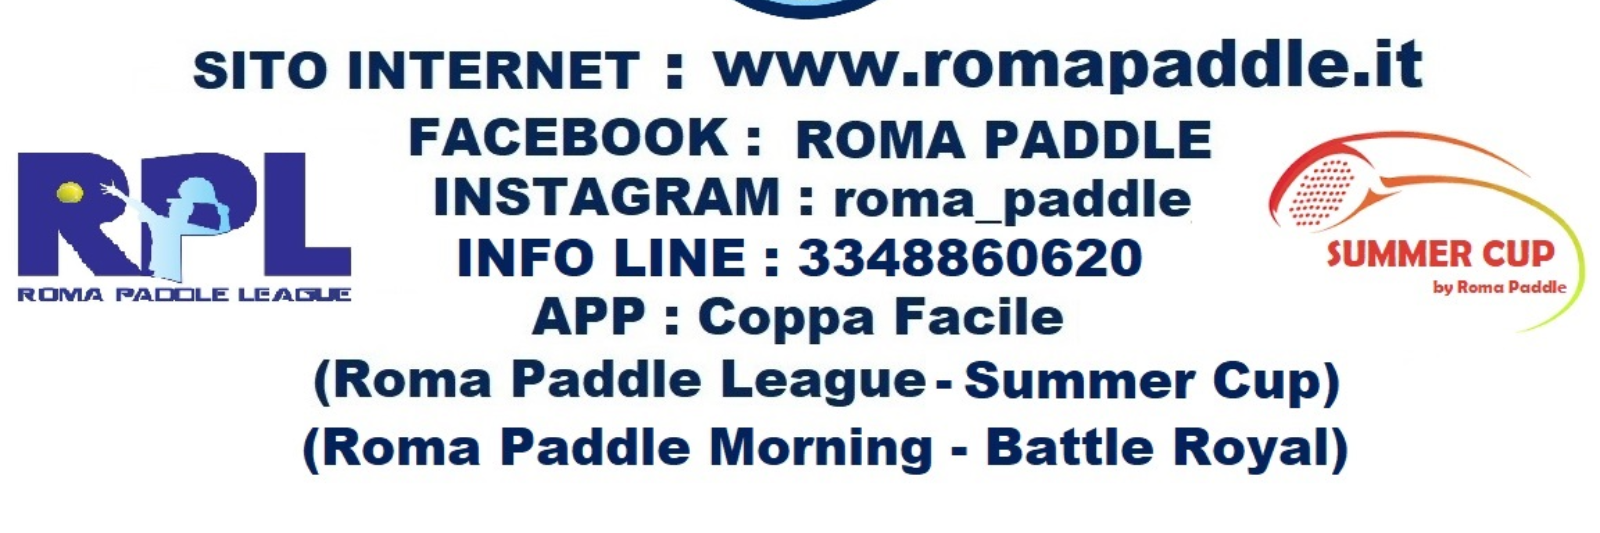 Roma Paddle 